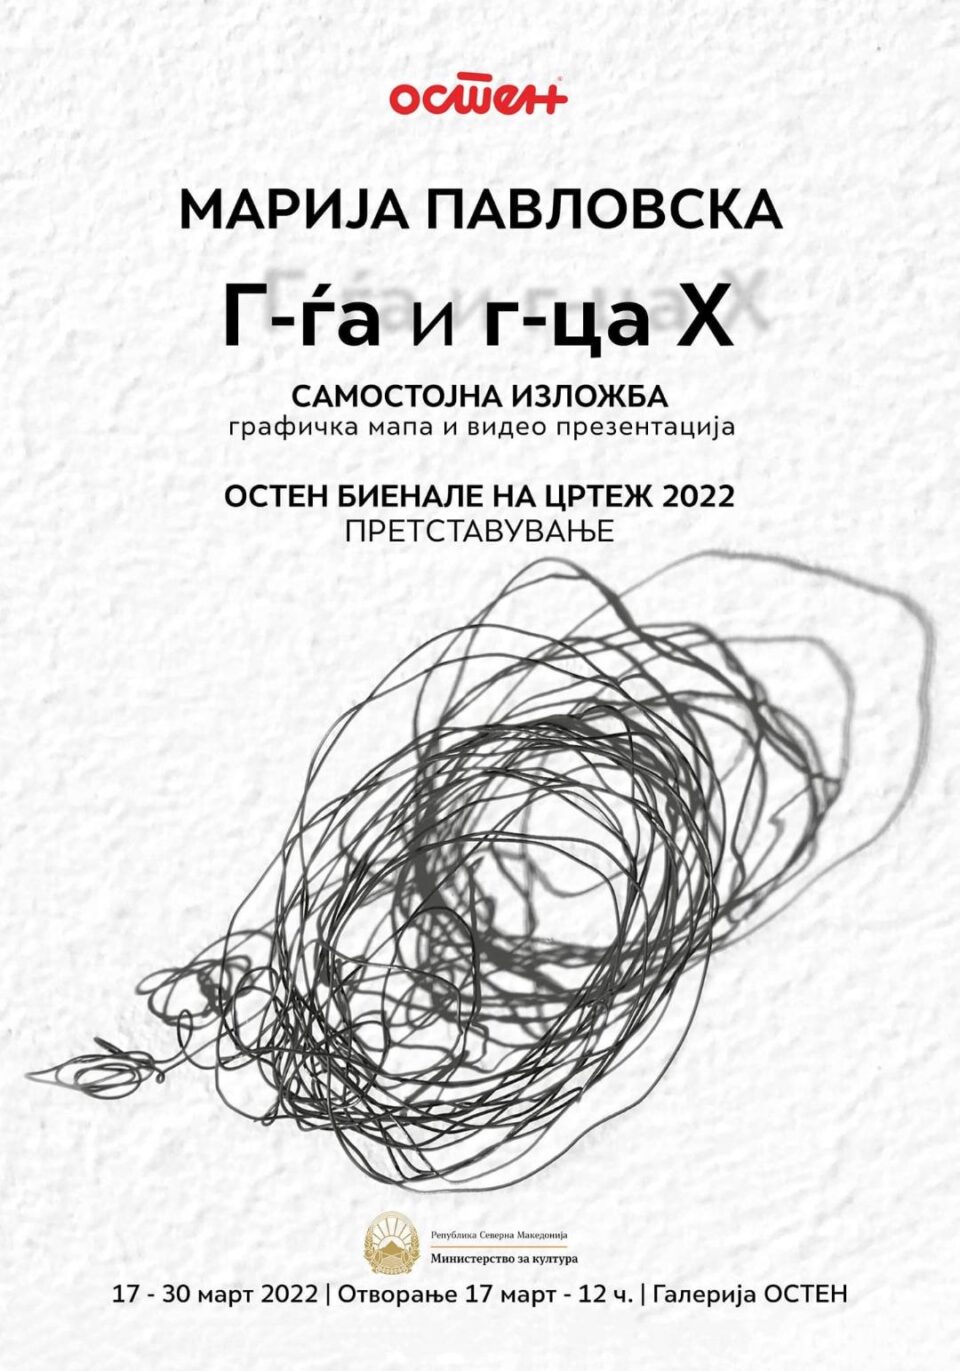 Марија Павловска изложува на ОСТЕН Биеналето на Цртеж 2022 година